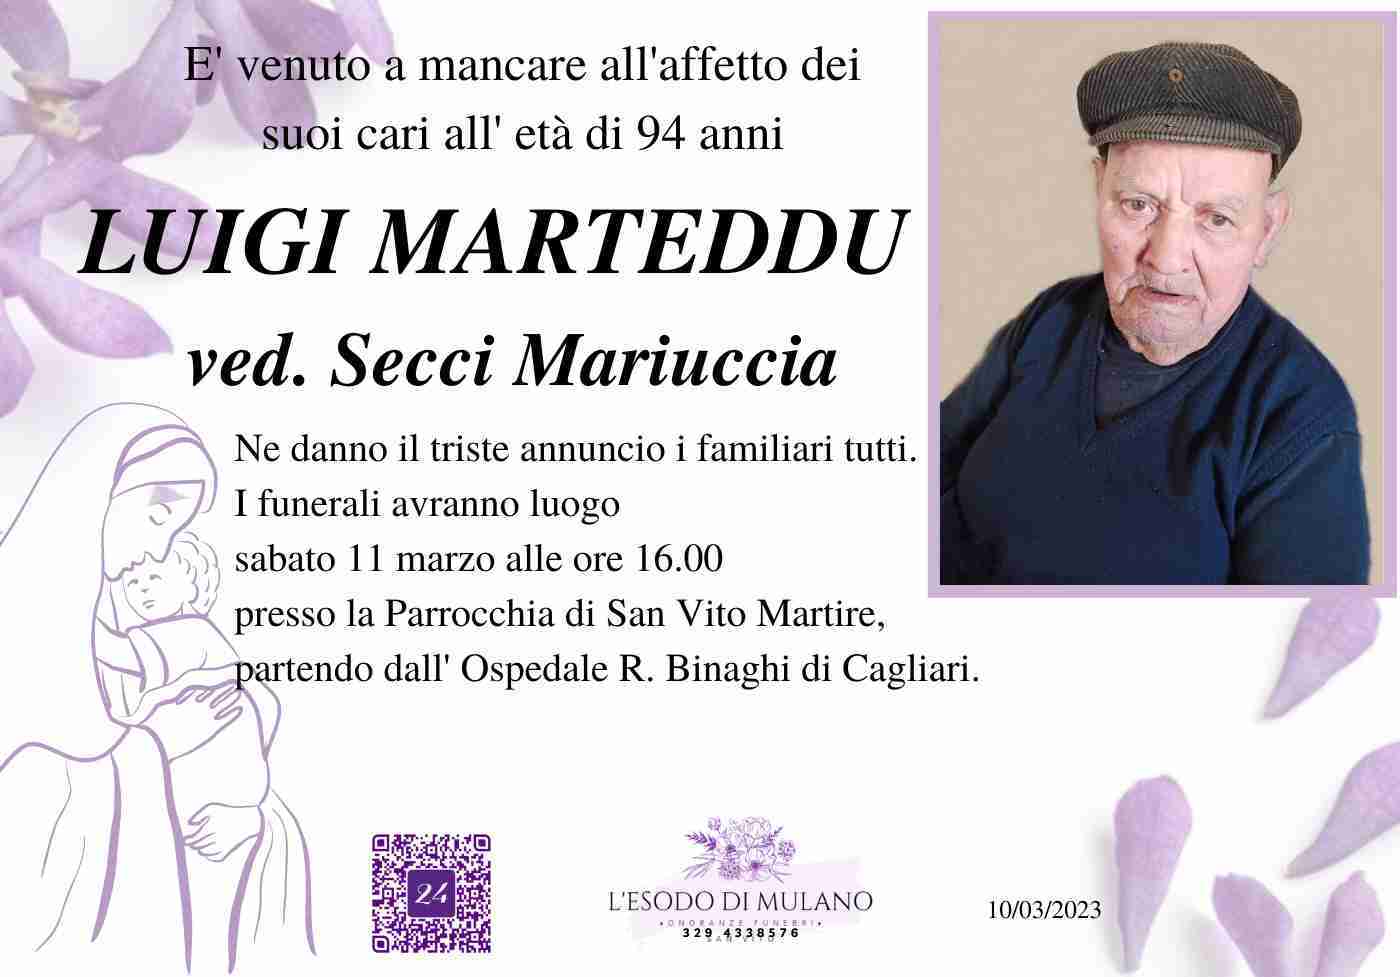 Luigi Marteddu